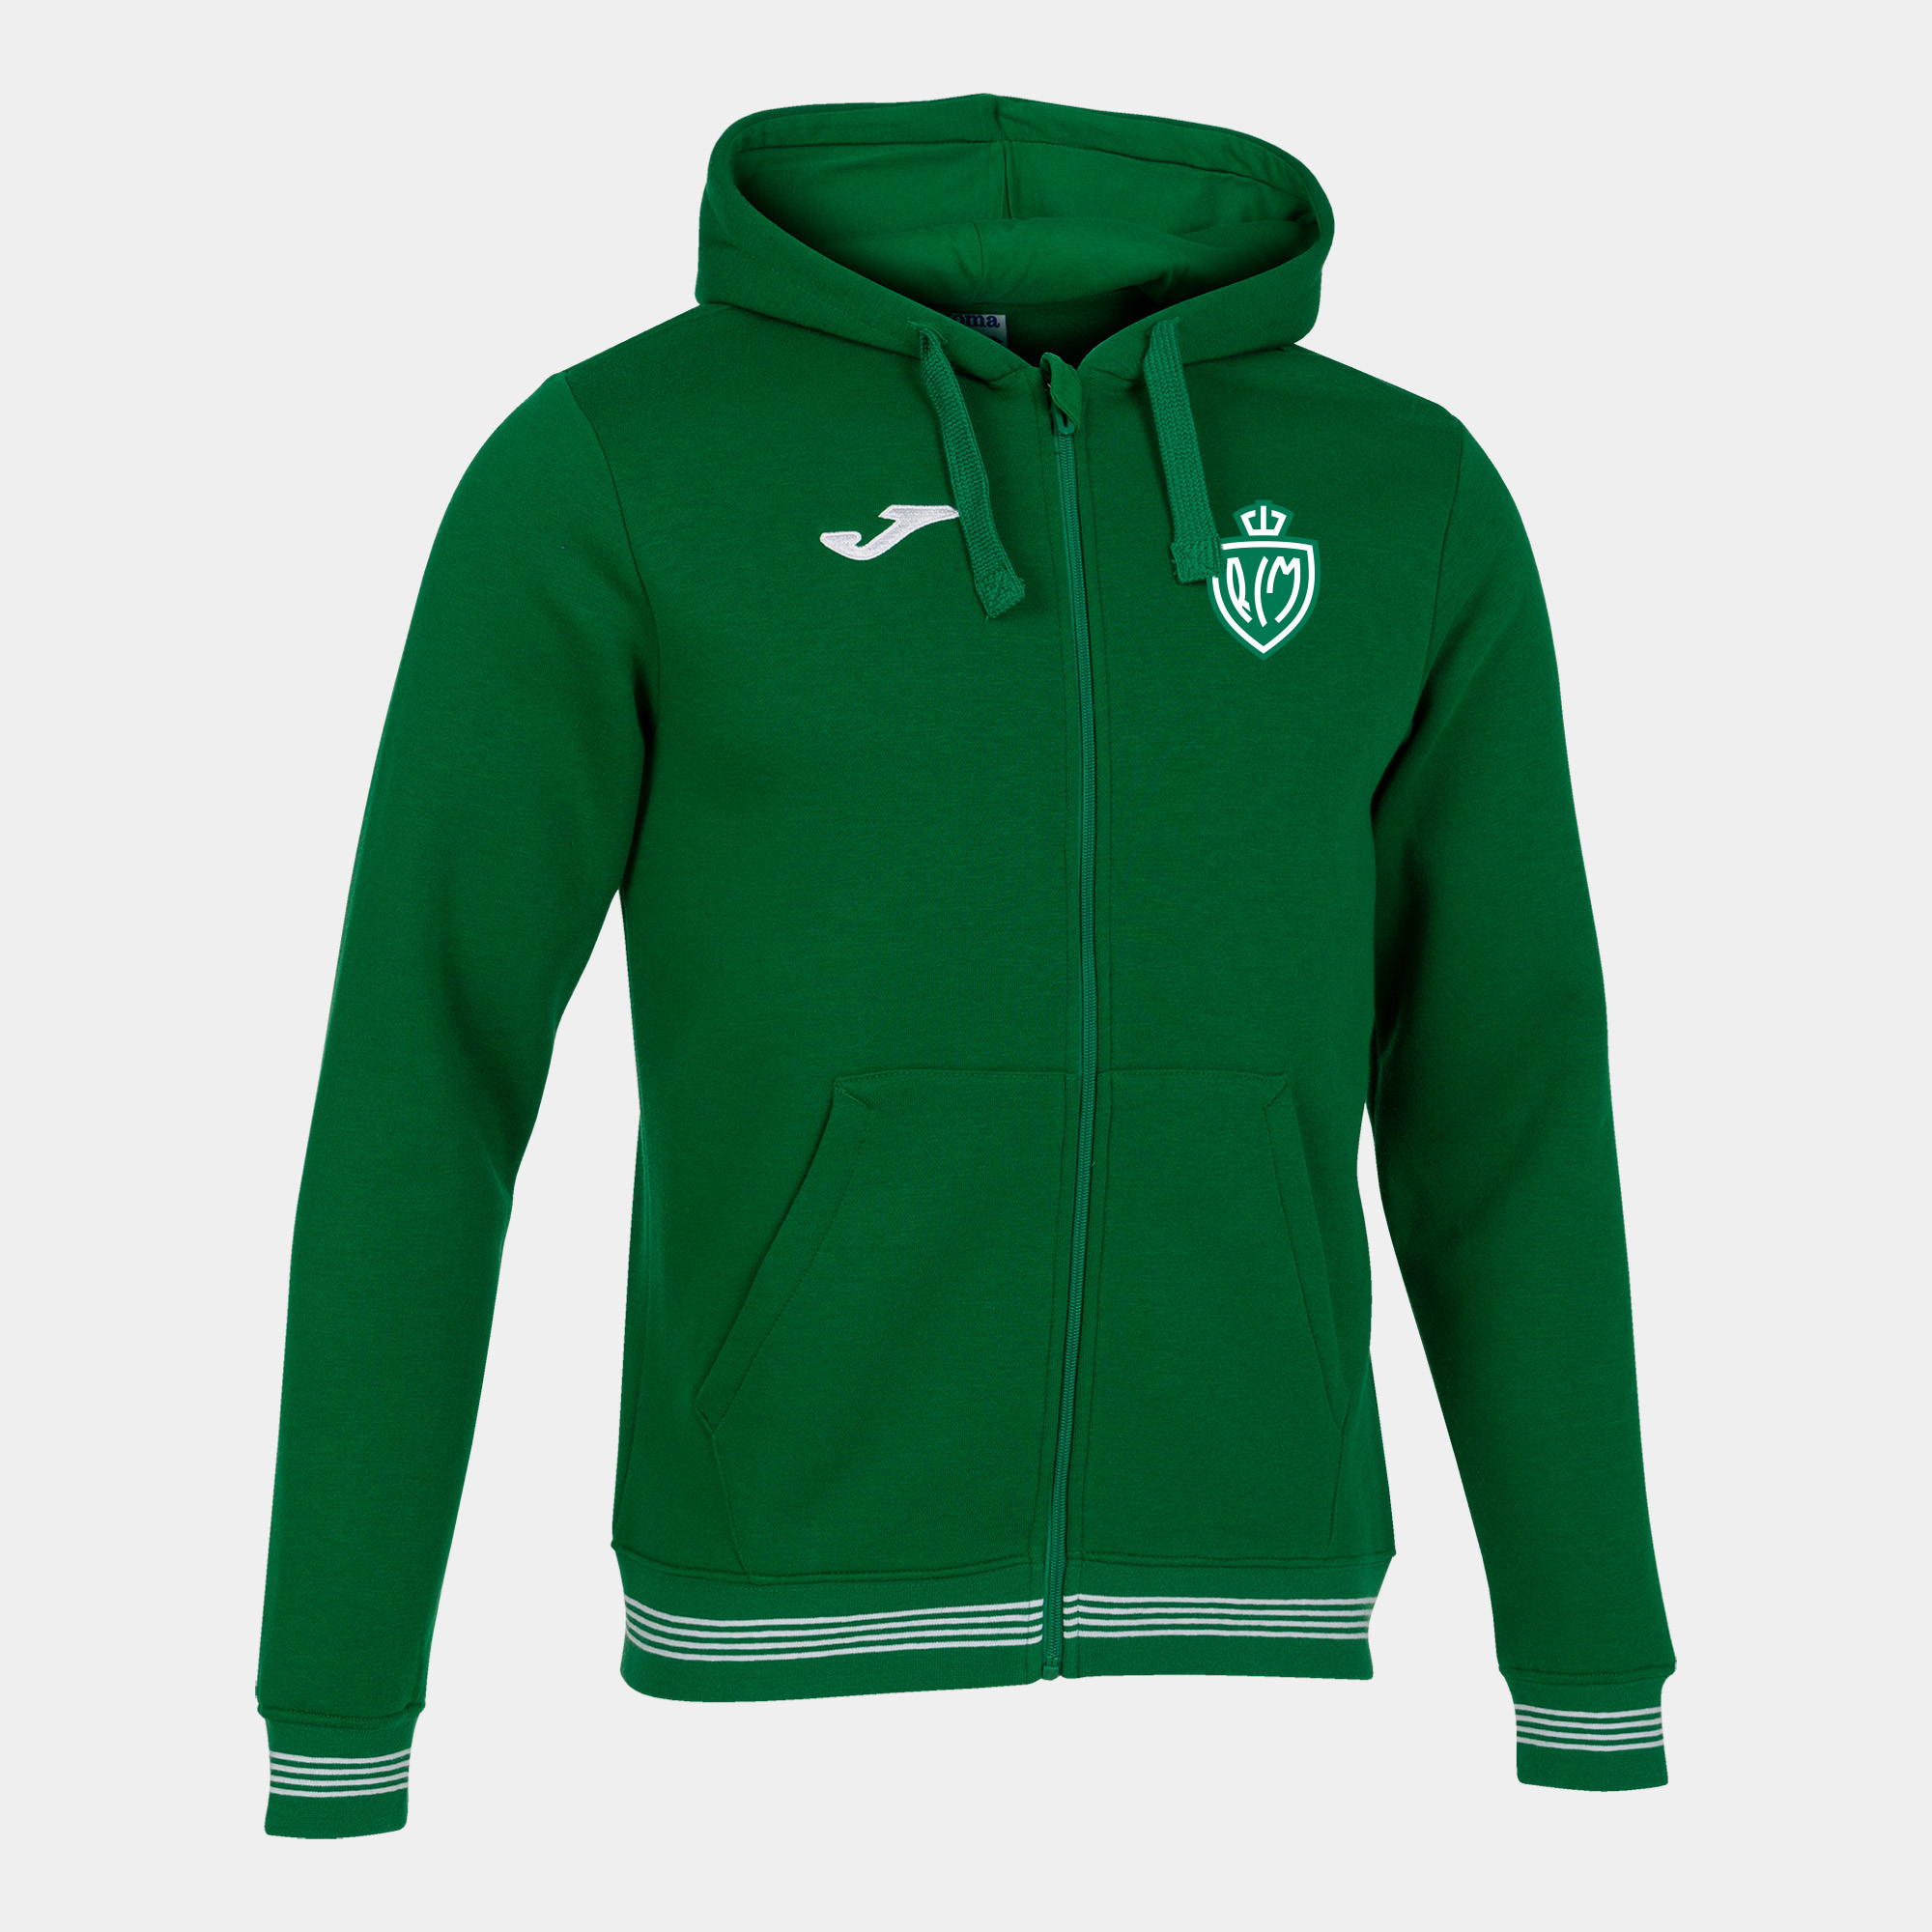 Racing Mechelen - Hooded jacket man Campus III green